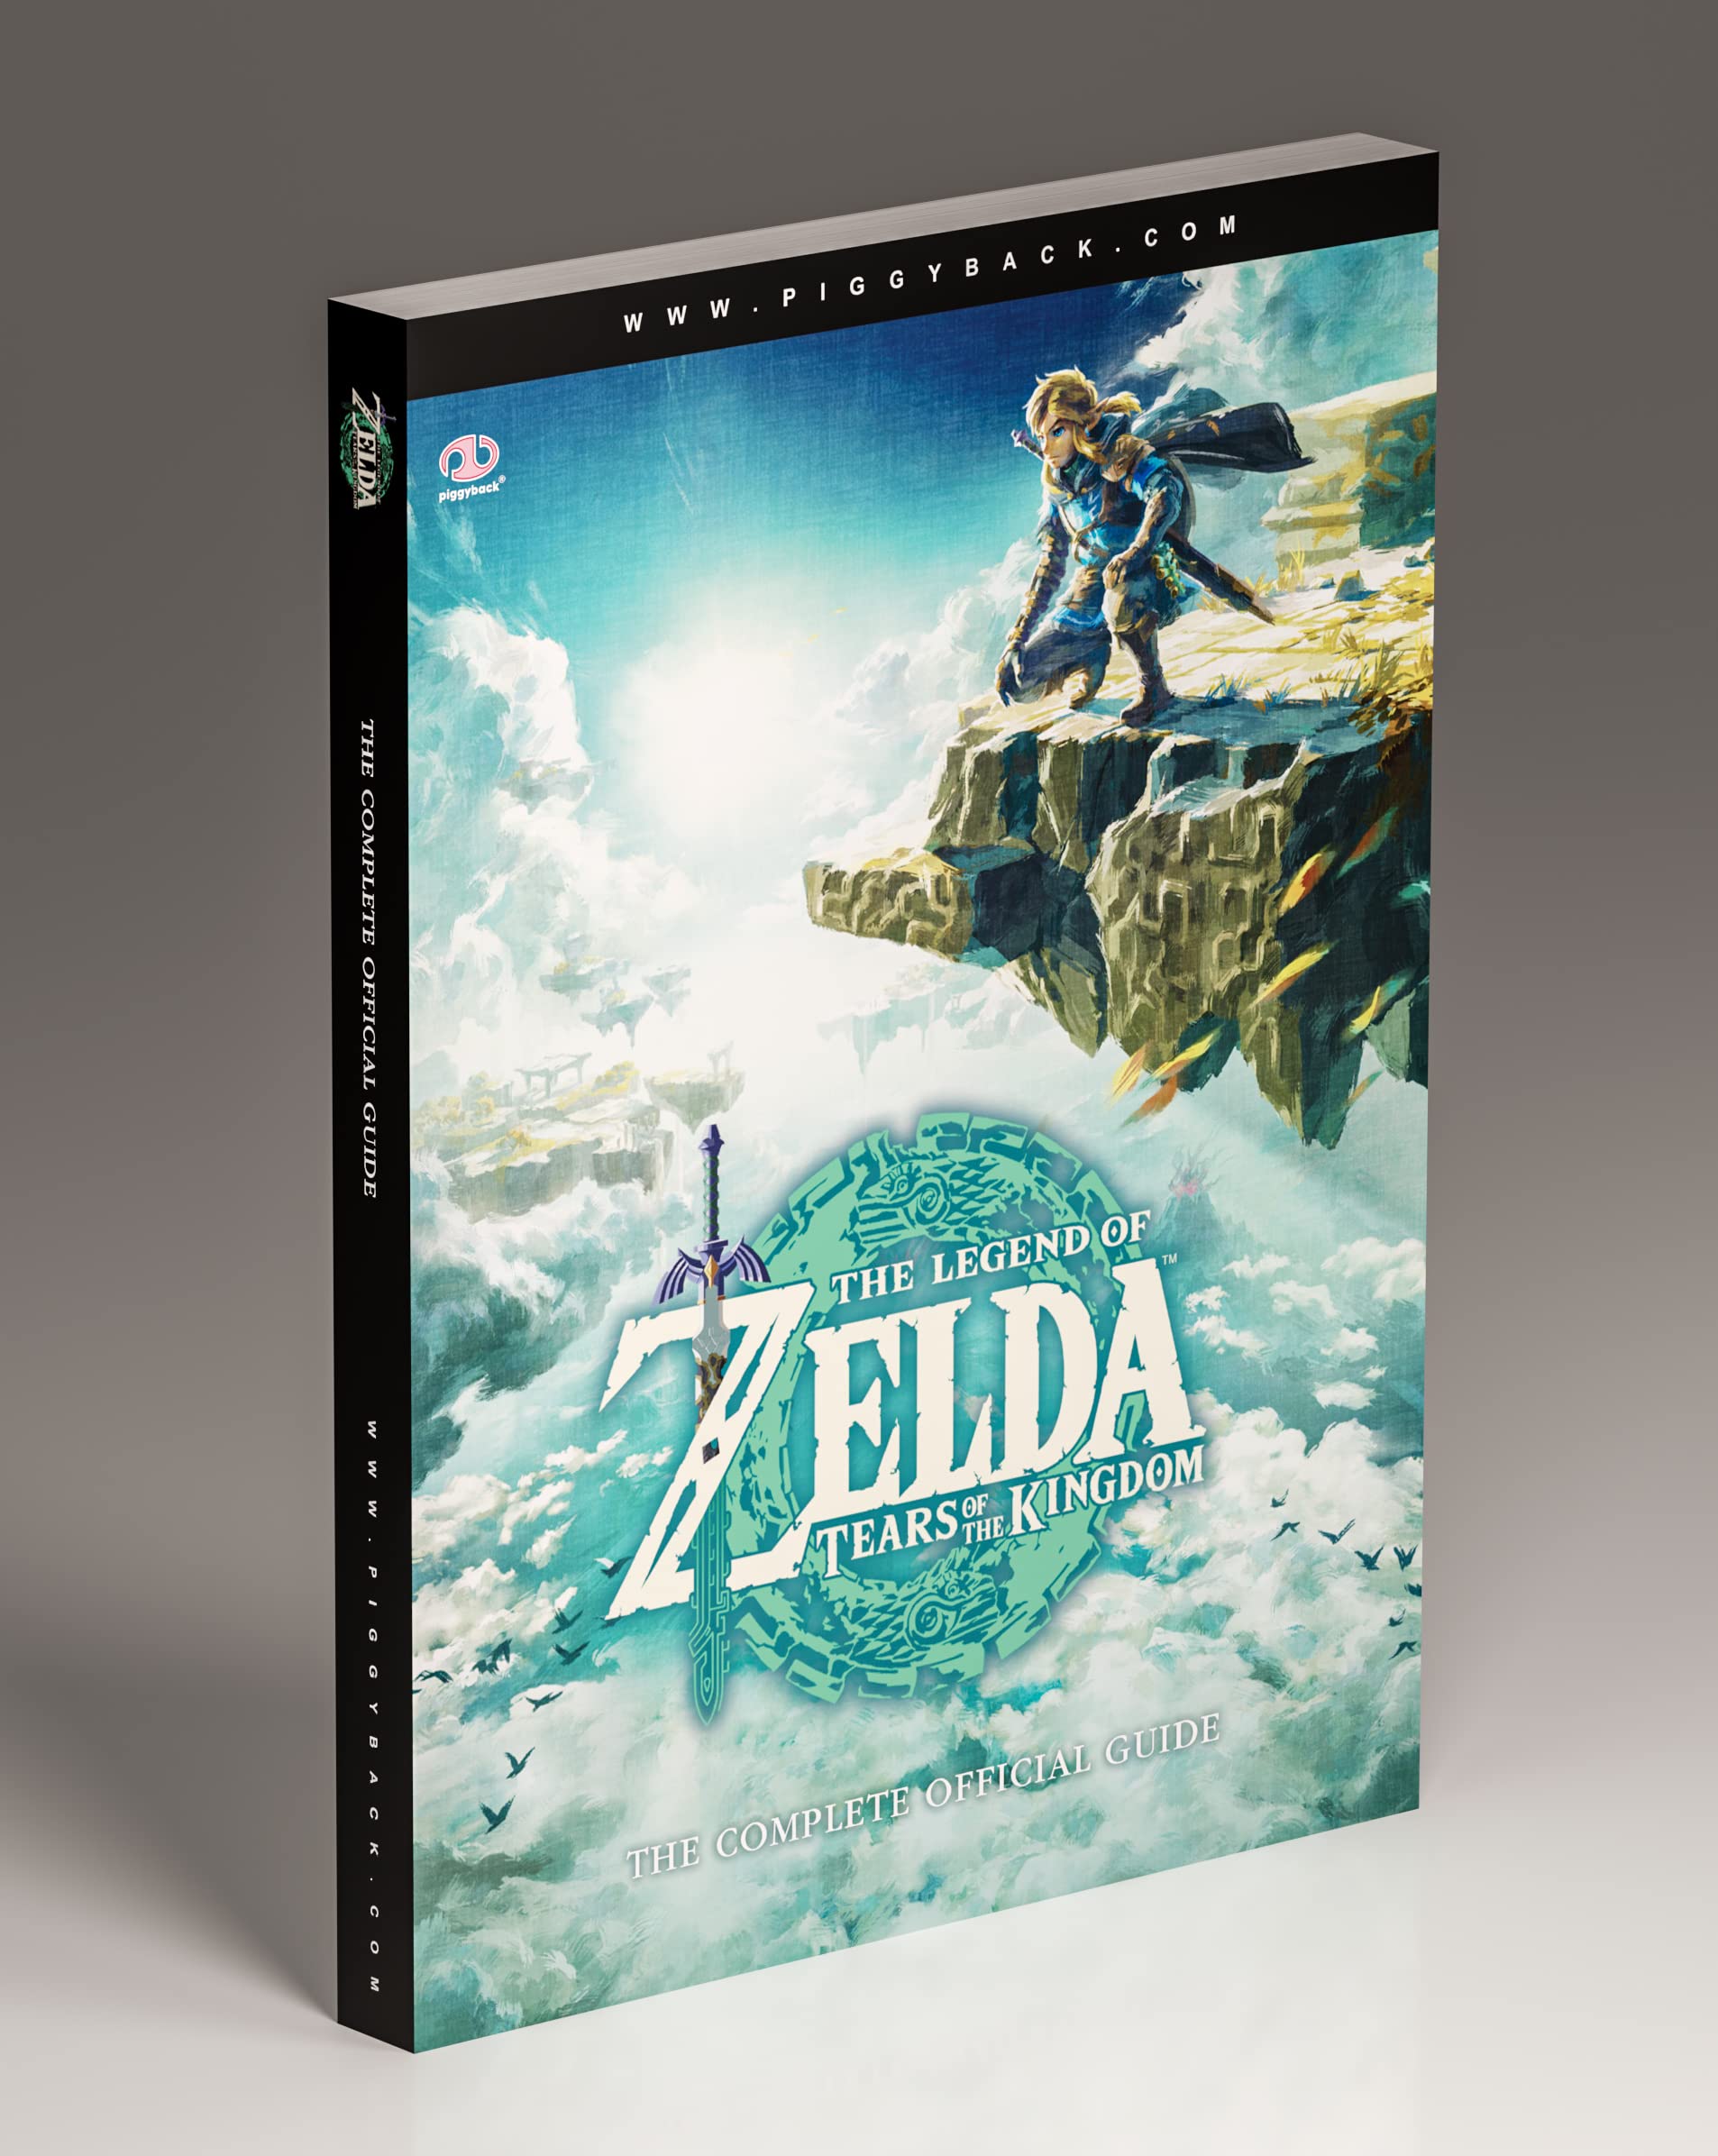 Here's where to buy Zelda Tears of the Kingdom, AKA BOTW2 for Nintendo  Switch